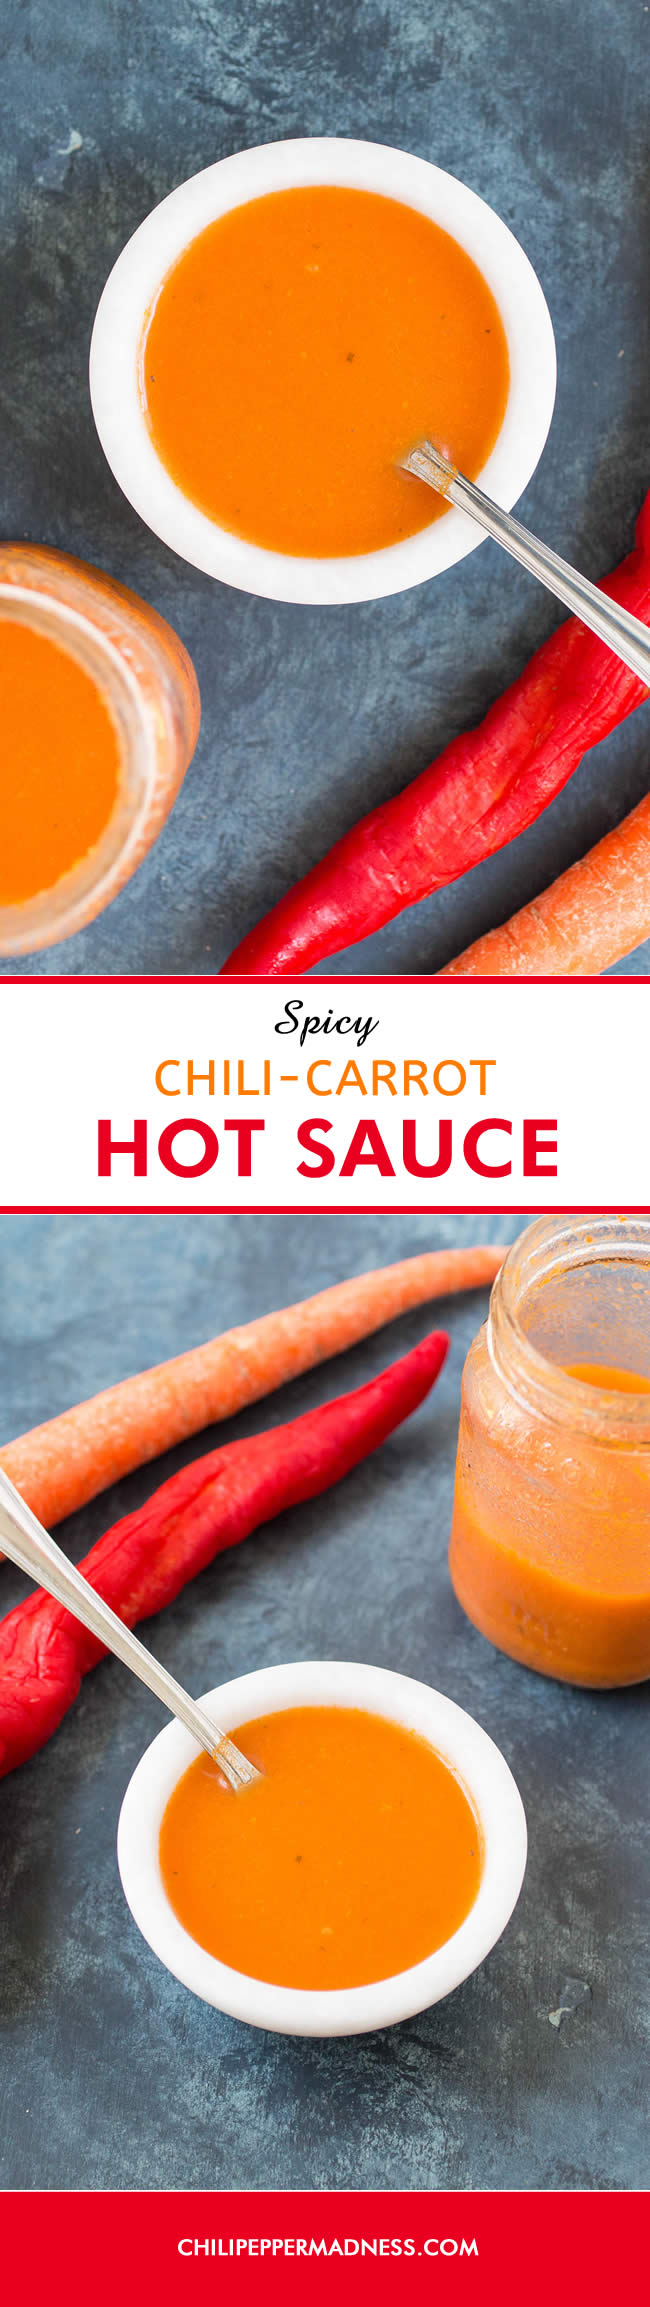 Spicy Chili-Carrot Hot Sauce - Recipe